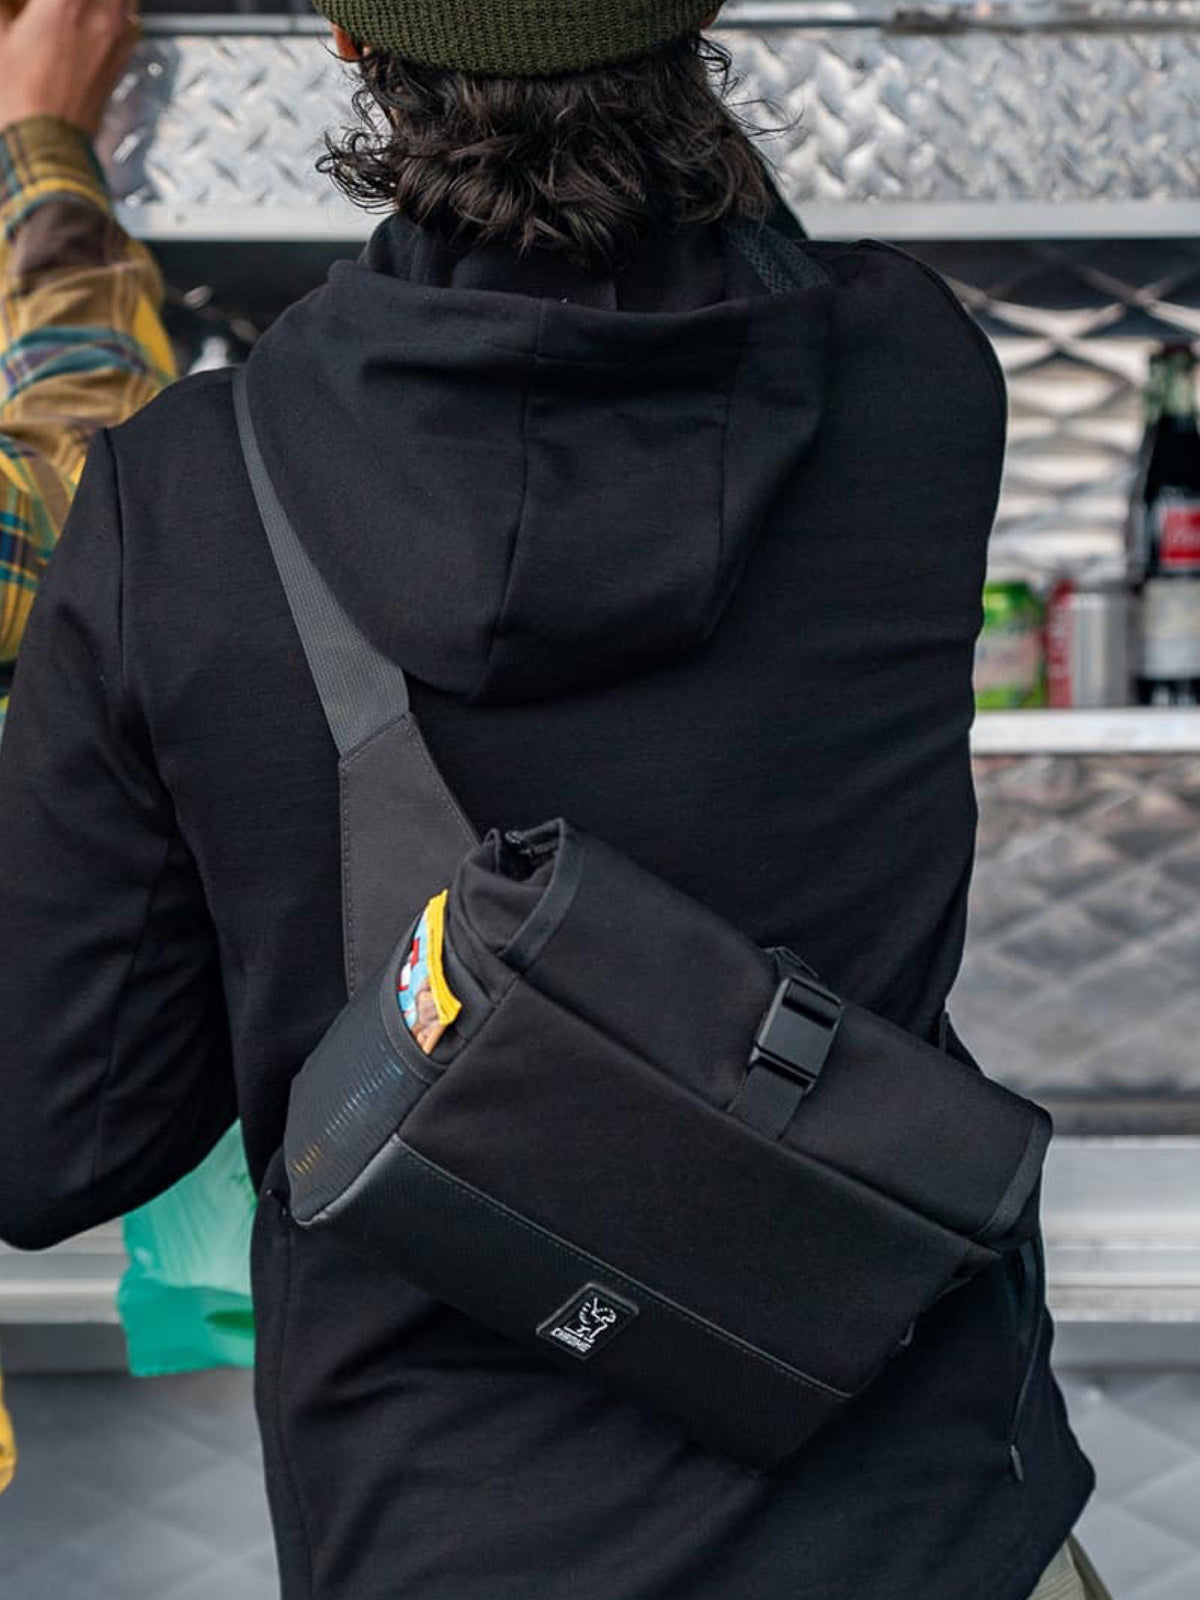 Chrome Industries Doubletrack Handlebar Bag Black